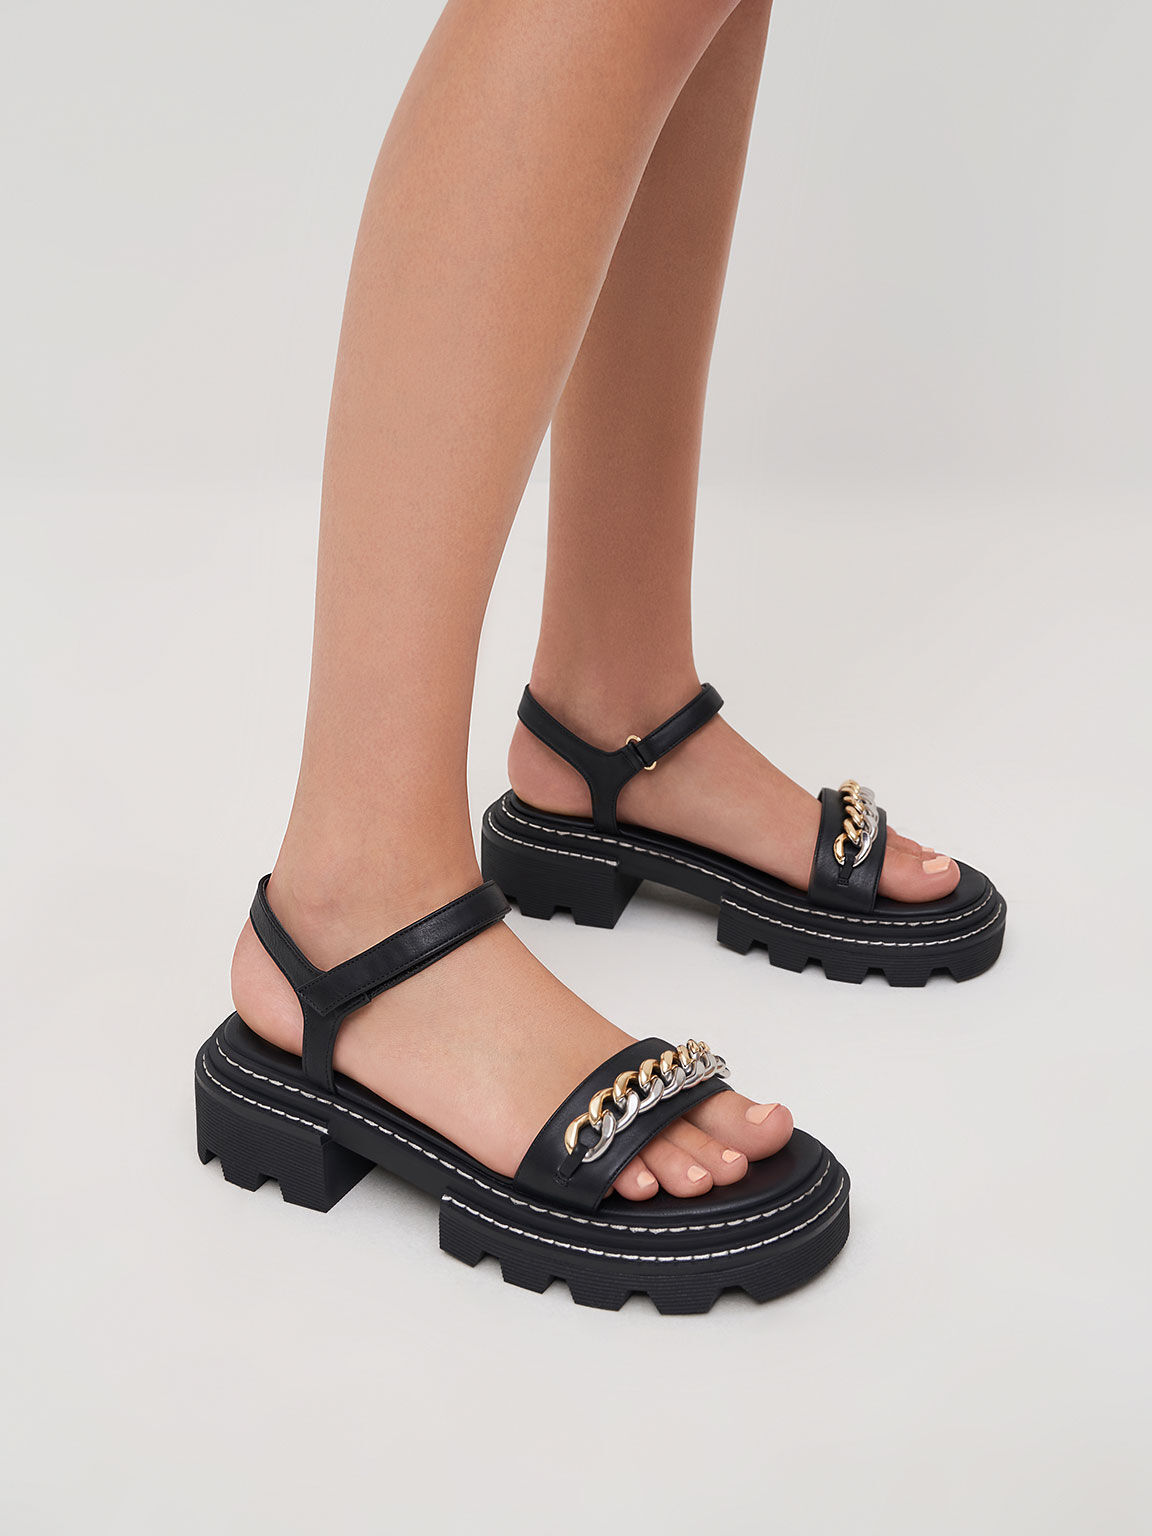 Chain-Link Contrast-Trim Sandals, Black, hi-res